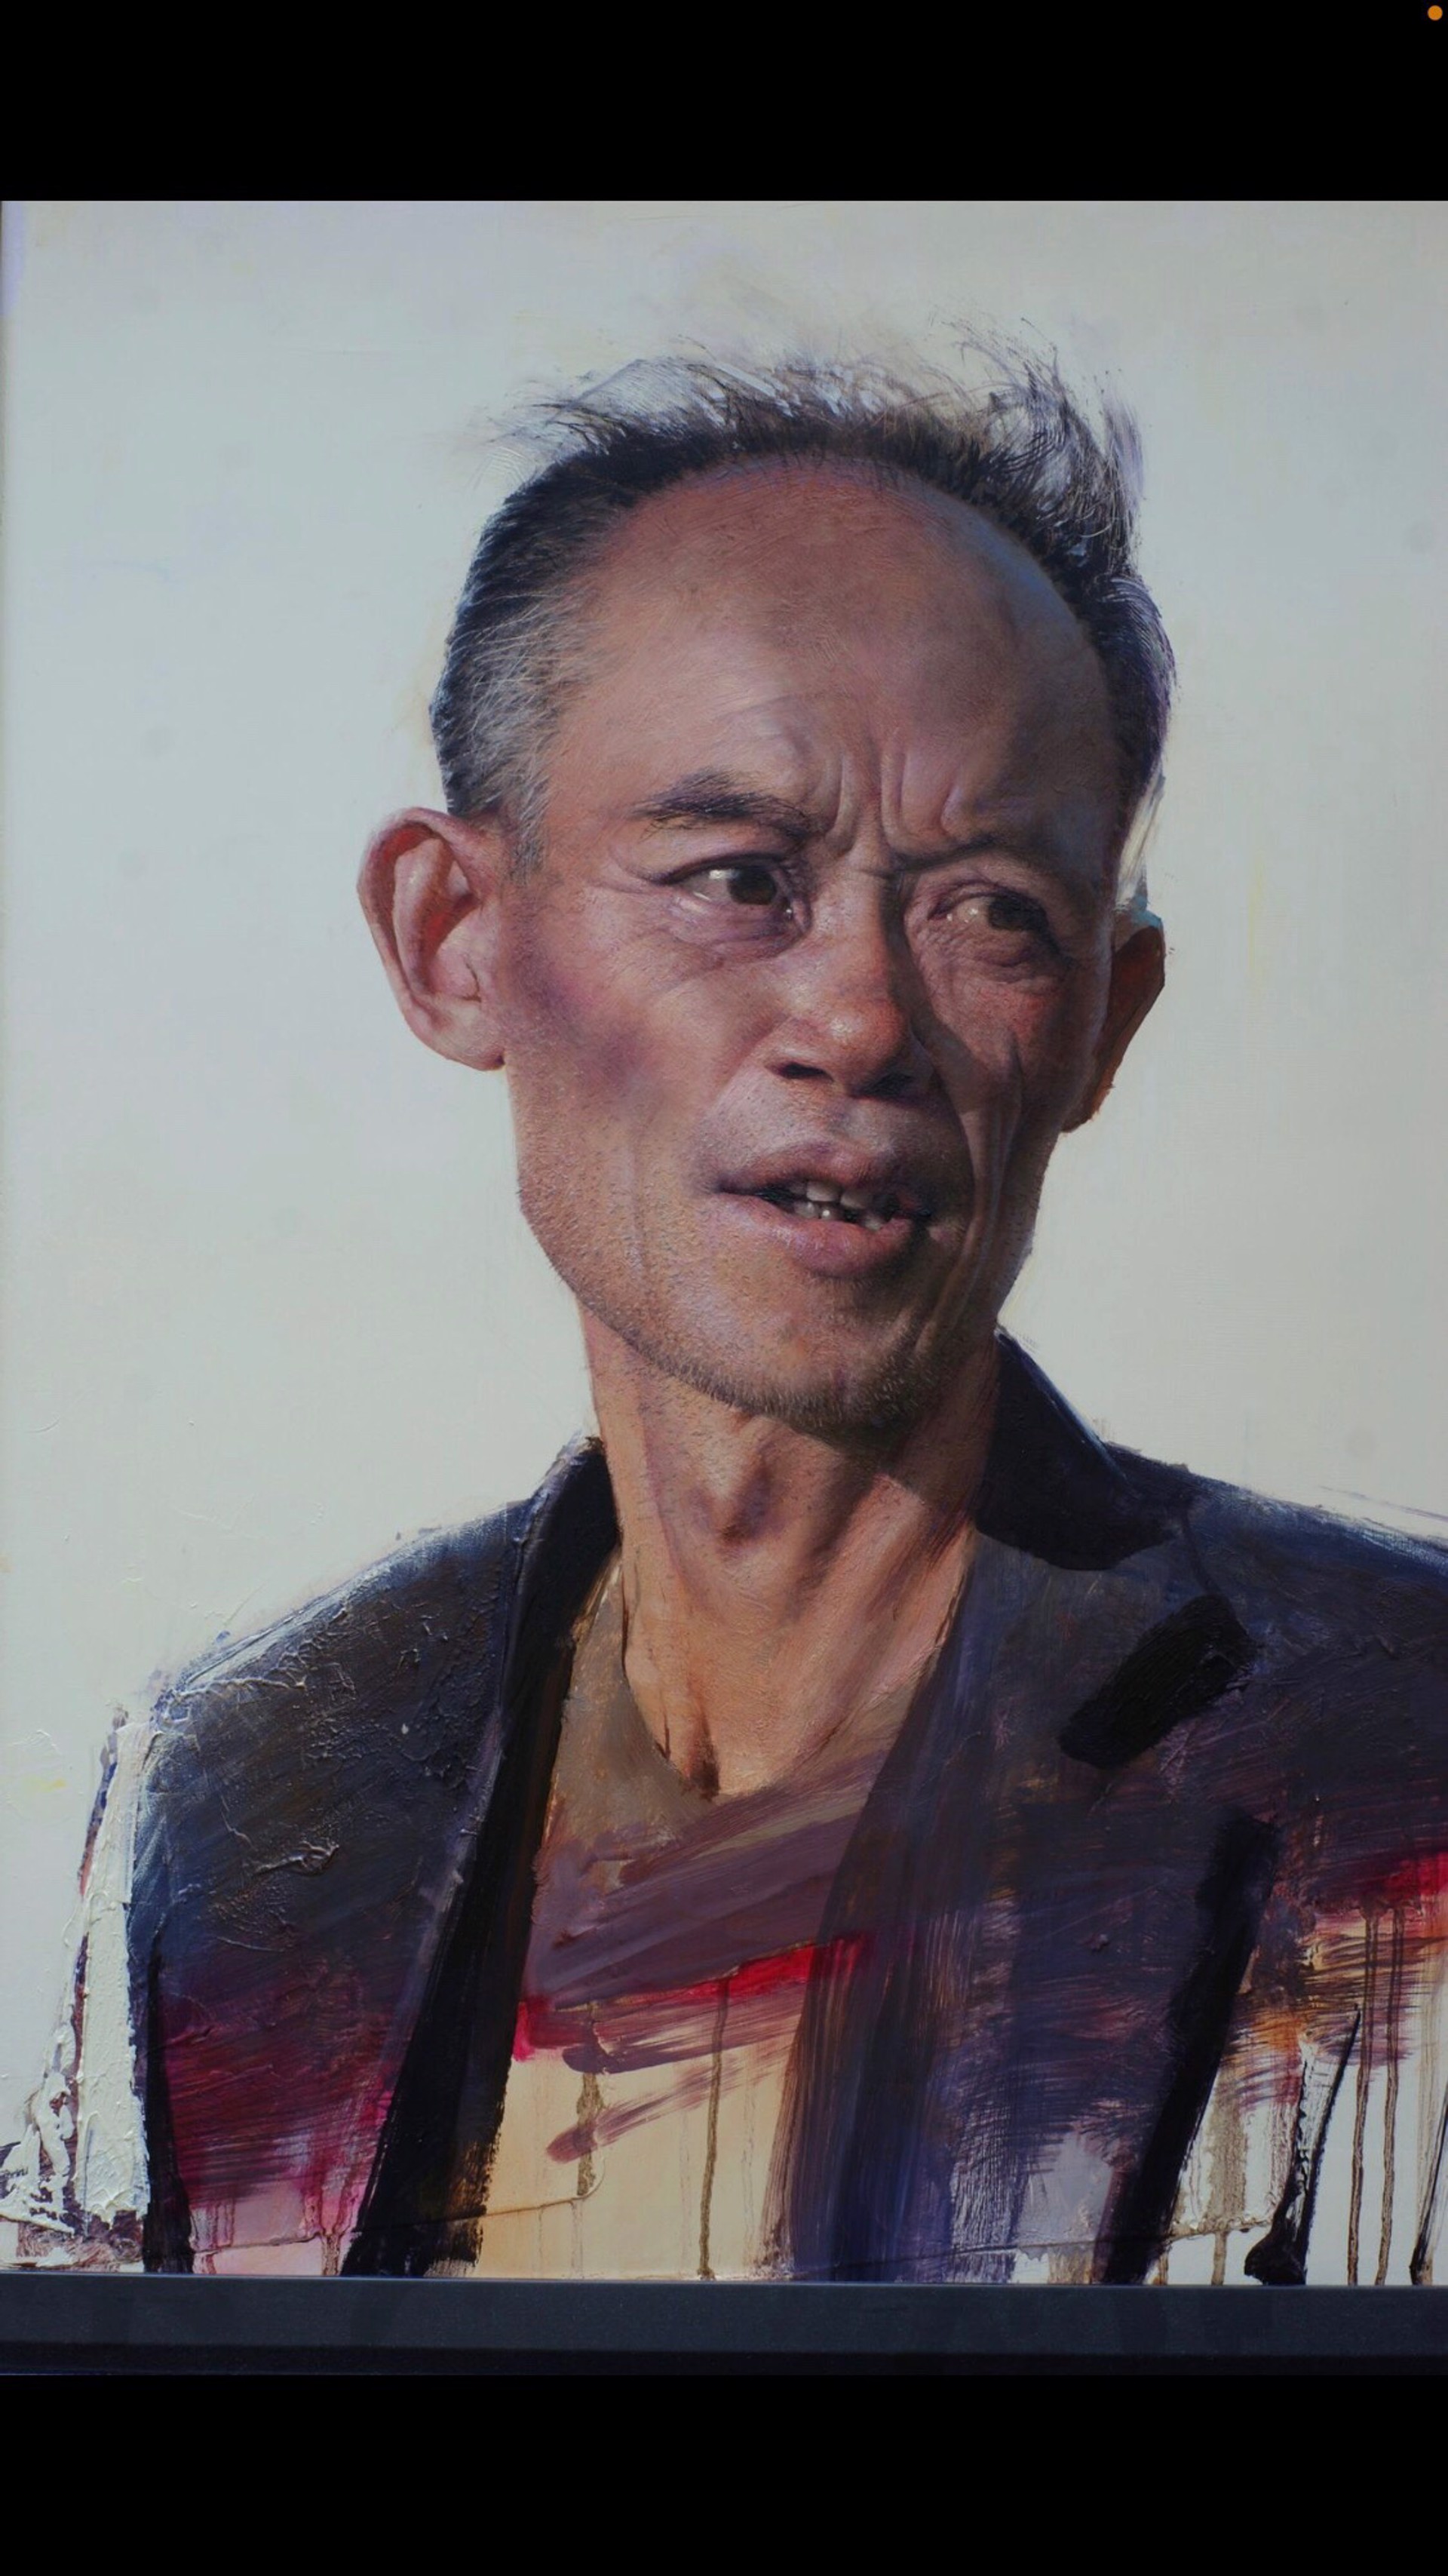 Beijing Man by Daniel Sprick